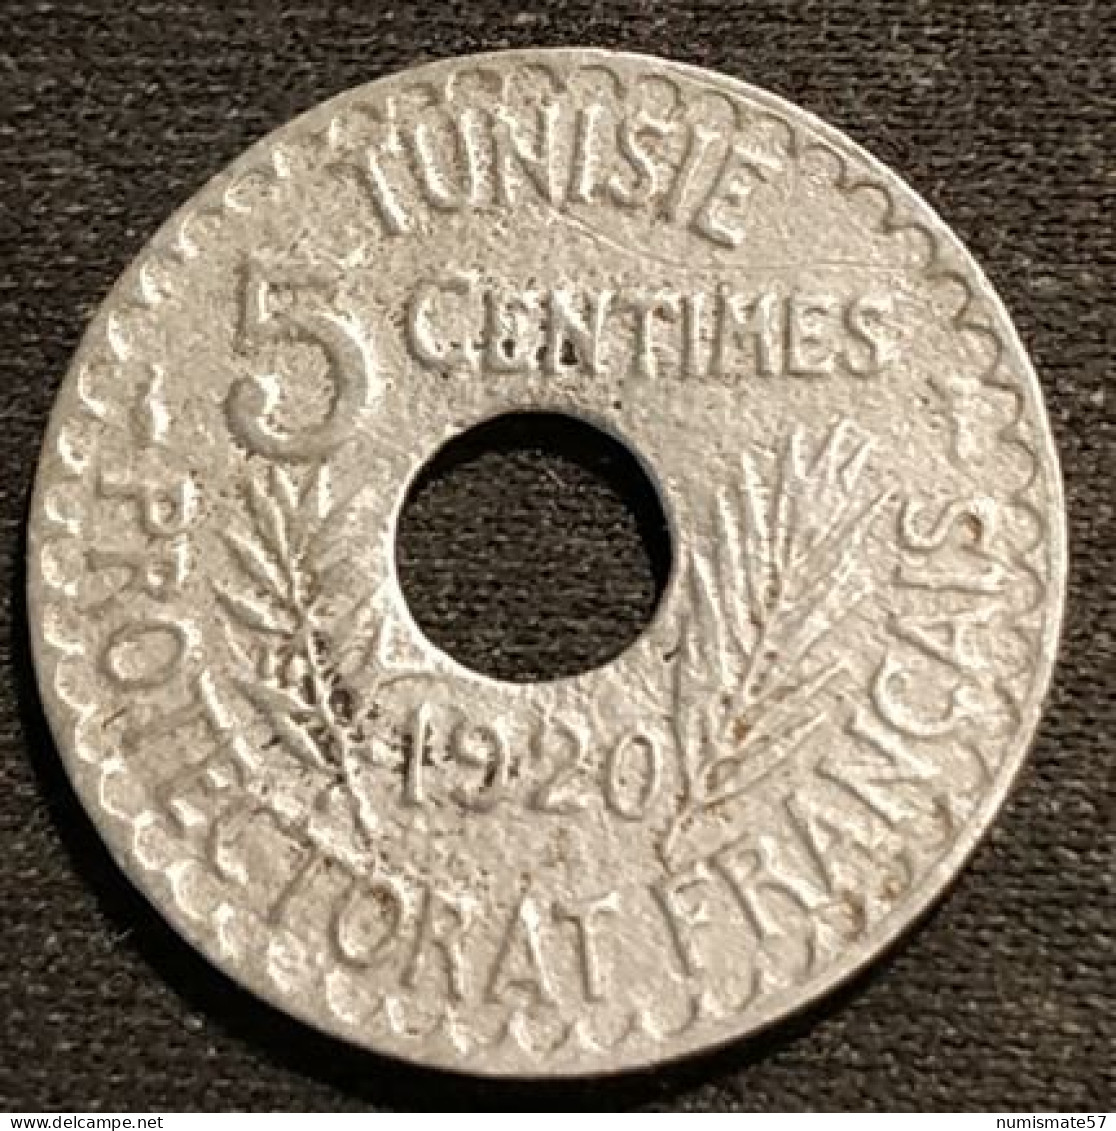 TUNISIE - TUNISIA - 5 CENTIMES 1920 ( 1339 ) - Grand Module - Muhammad Al-Nasir - Protectorat Français - KM 242 - Tunesien